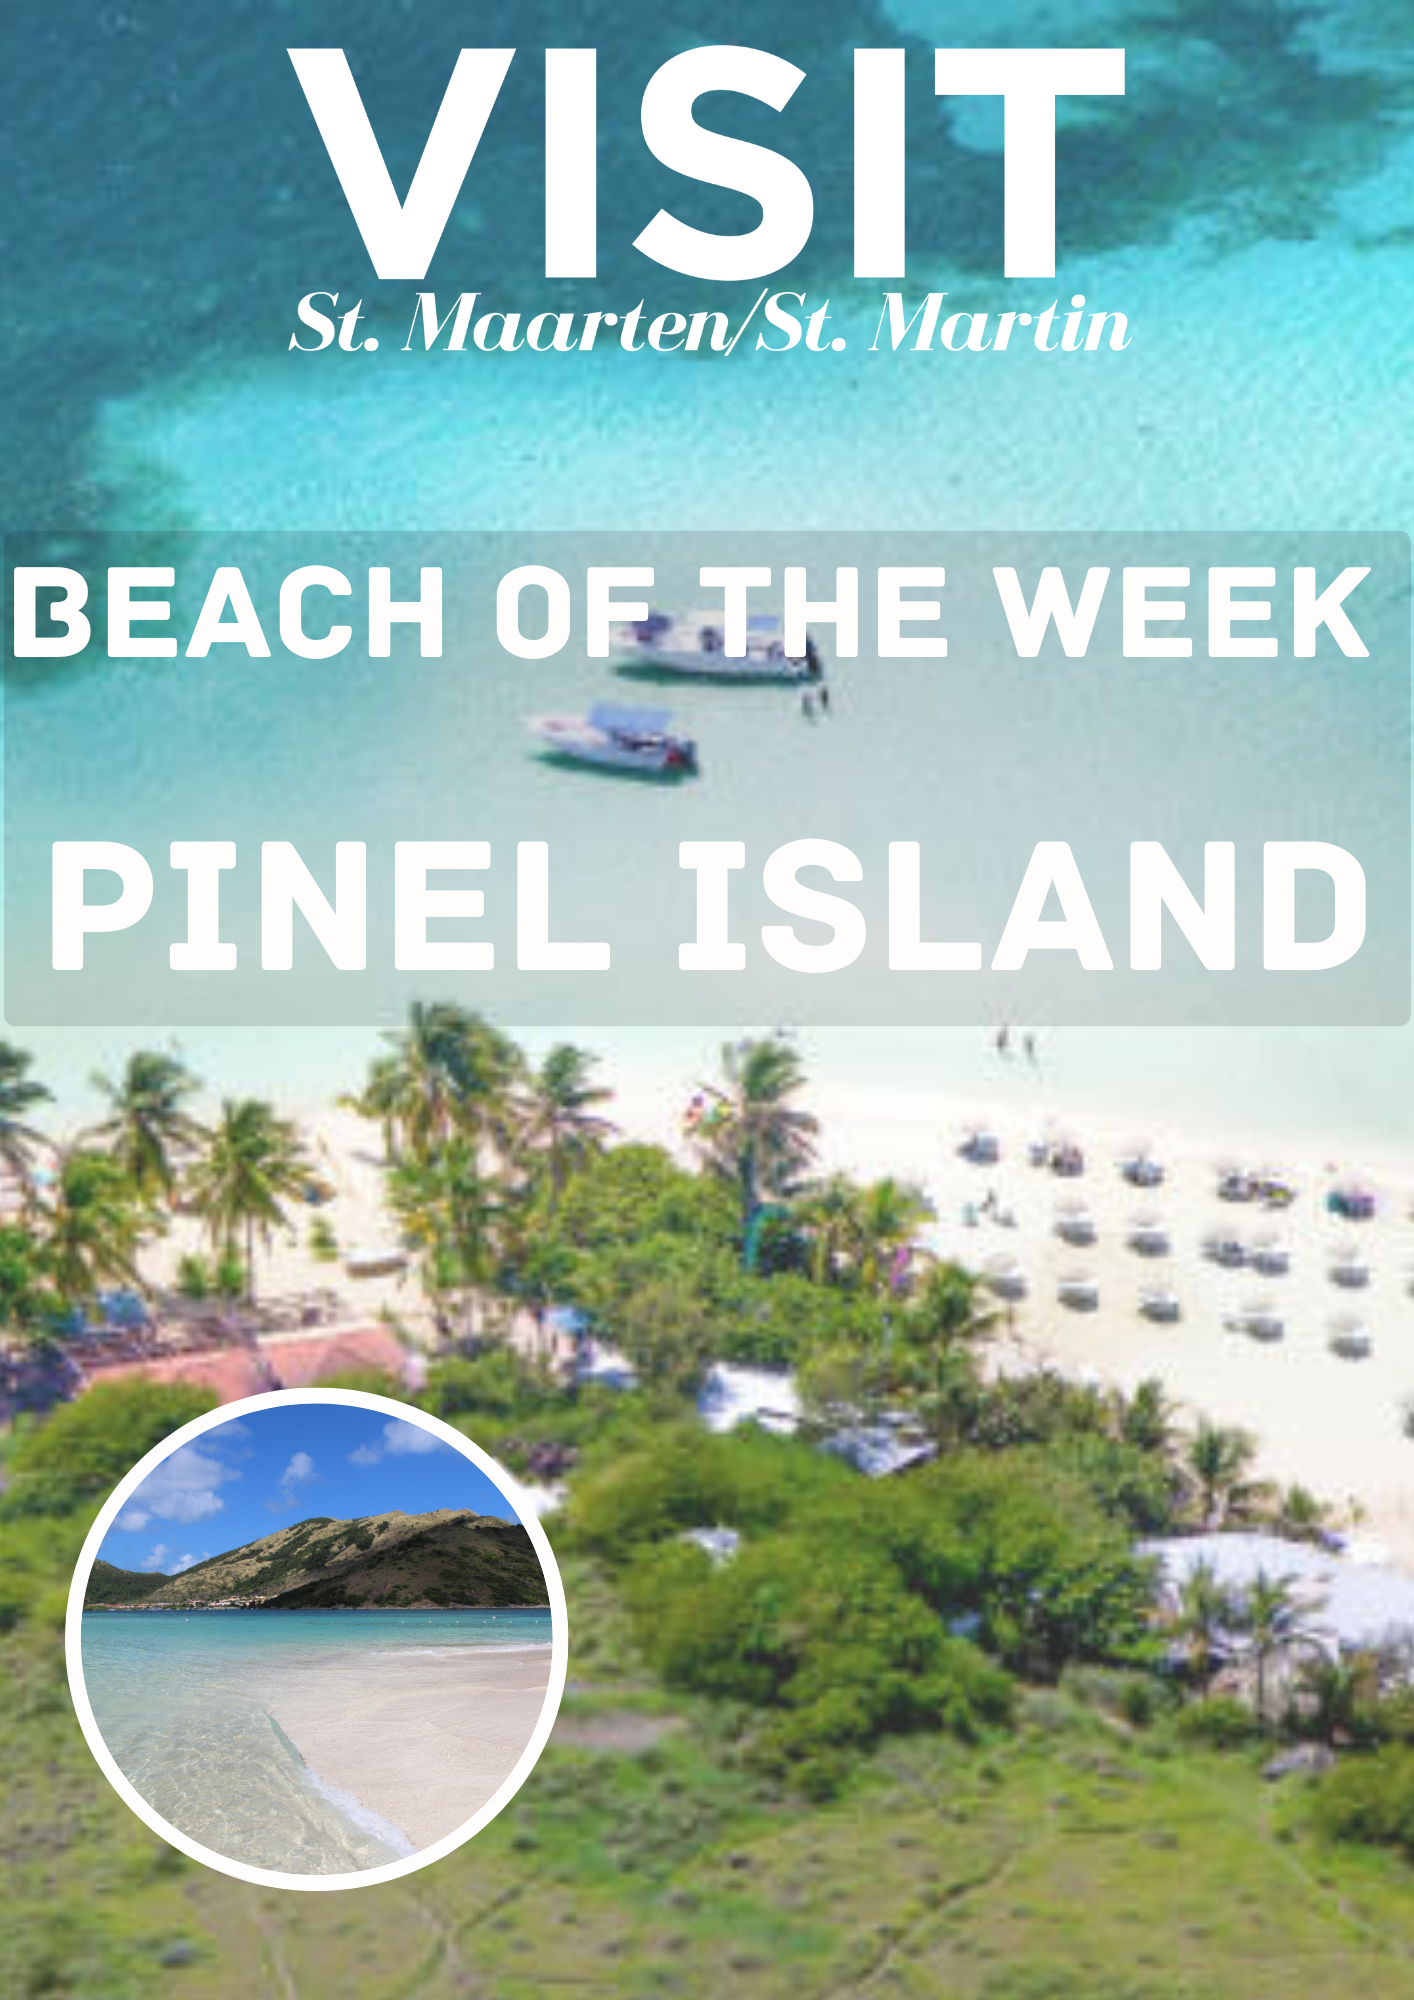 Pinel island